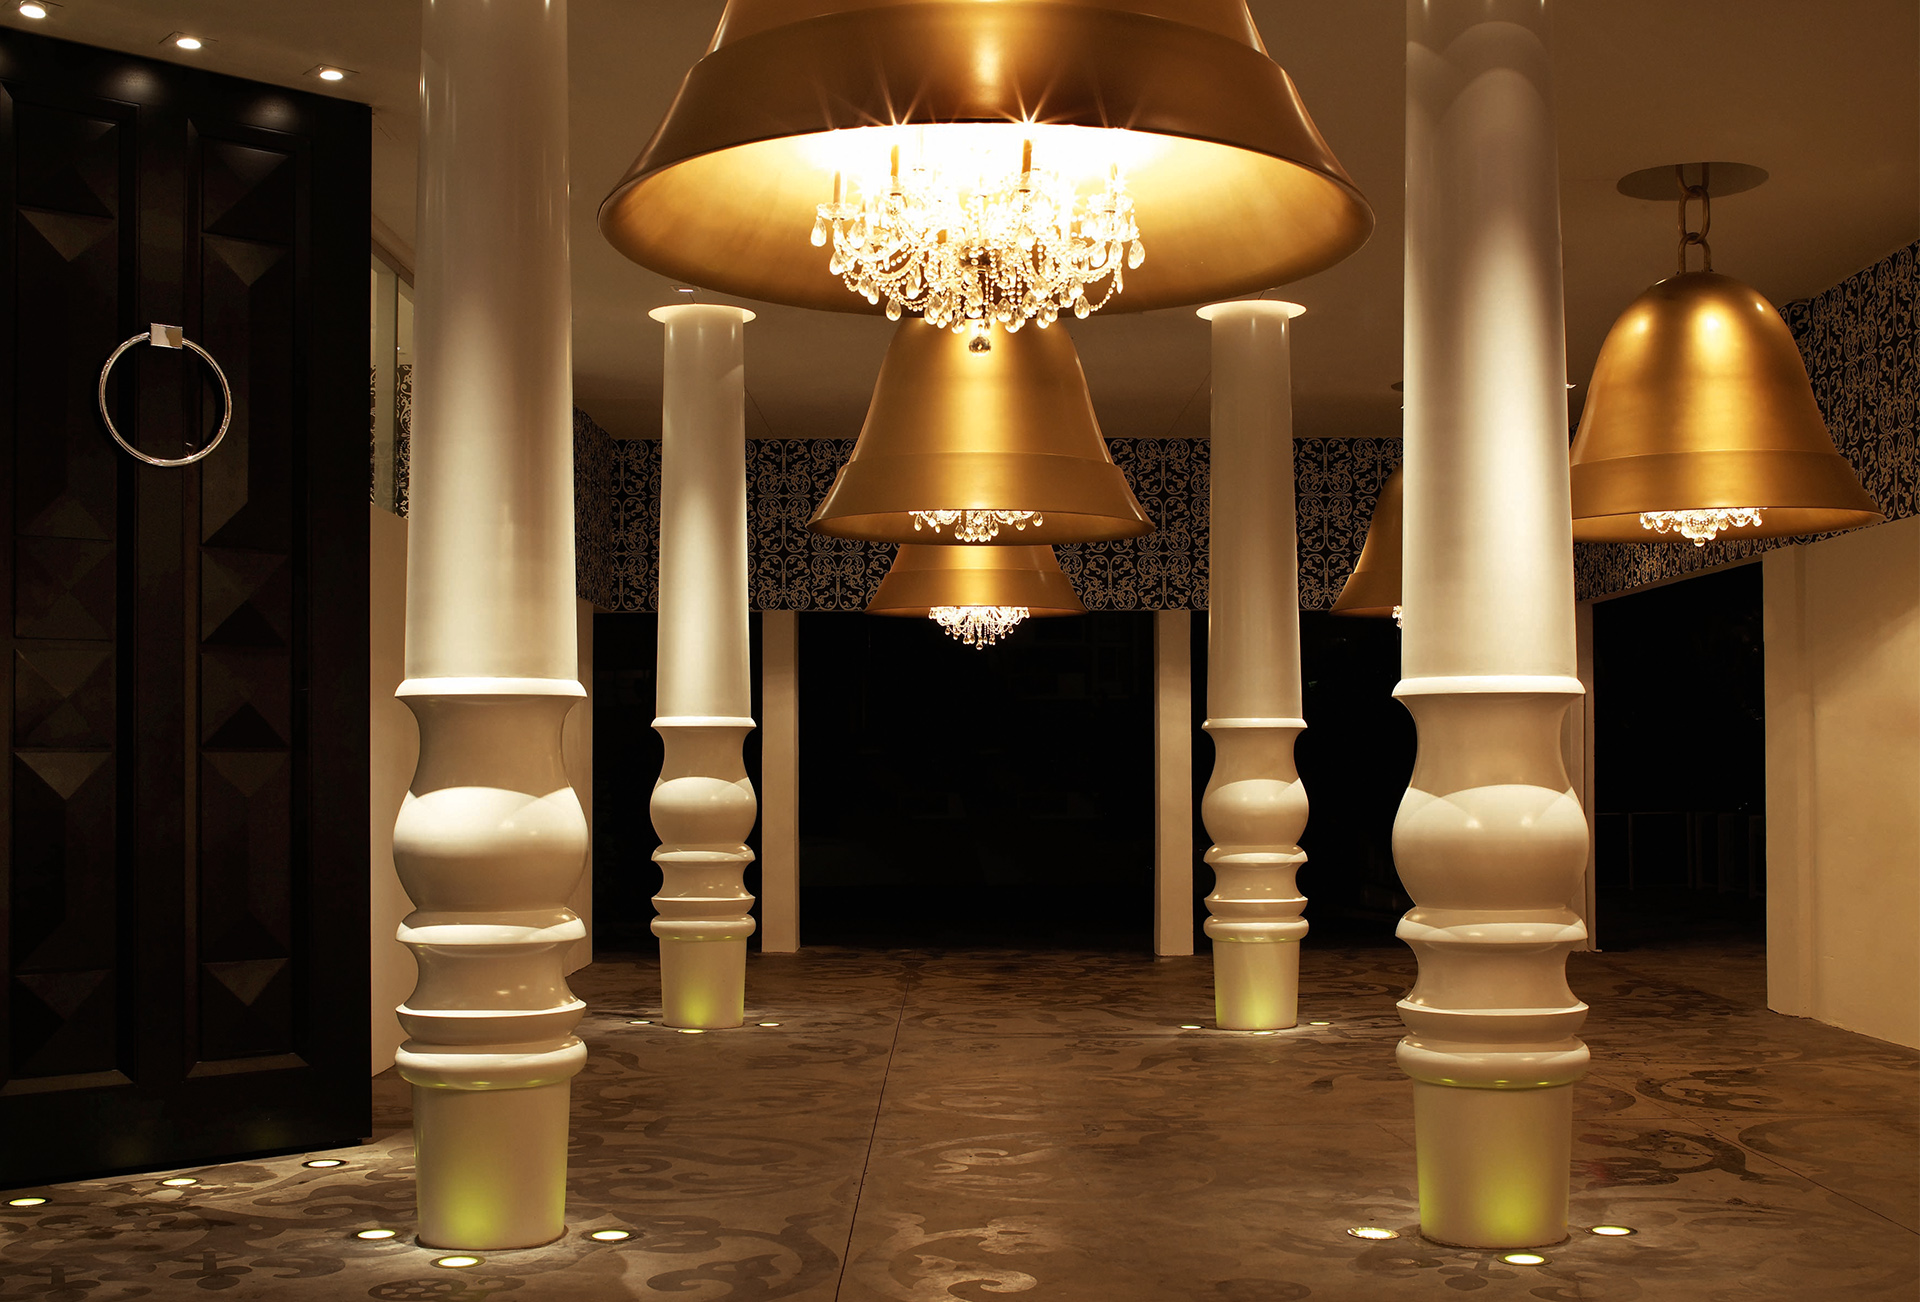 Enormes lámparas de campana doradas cuelgan en un pasillo entre columnas blancas.